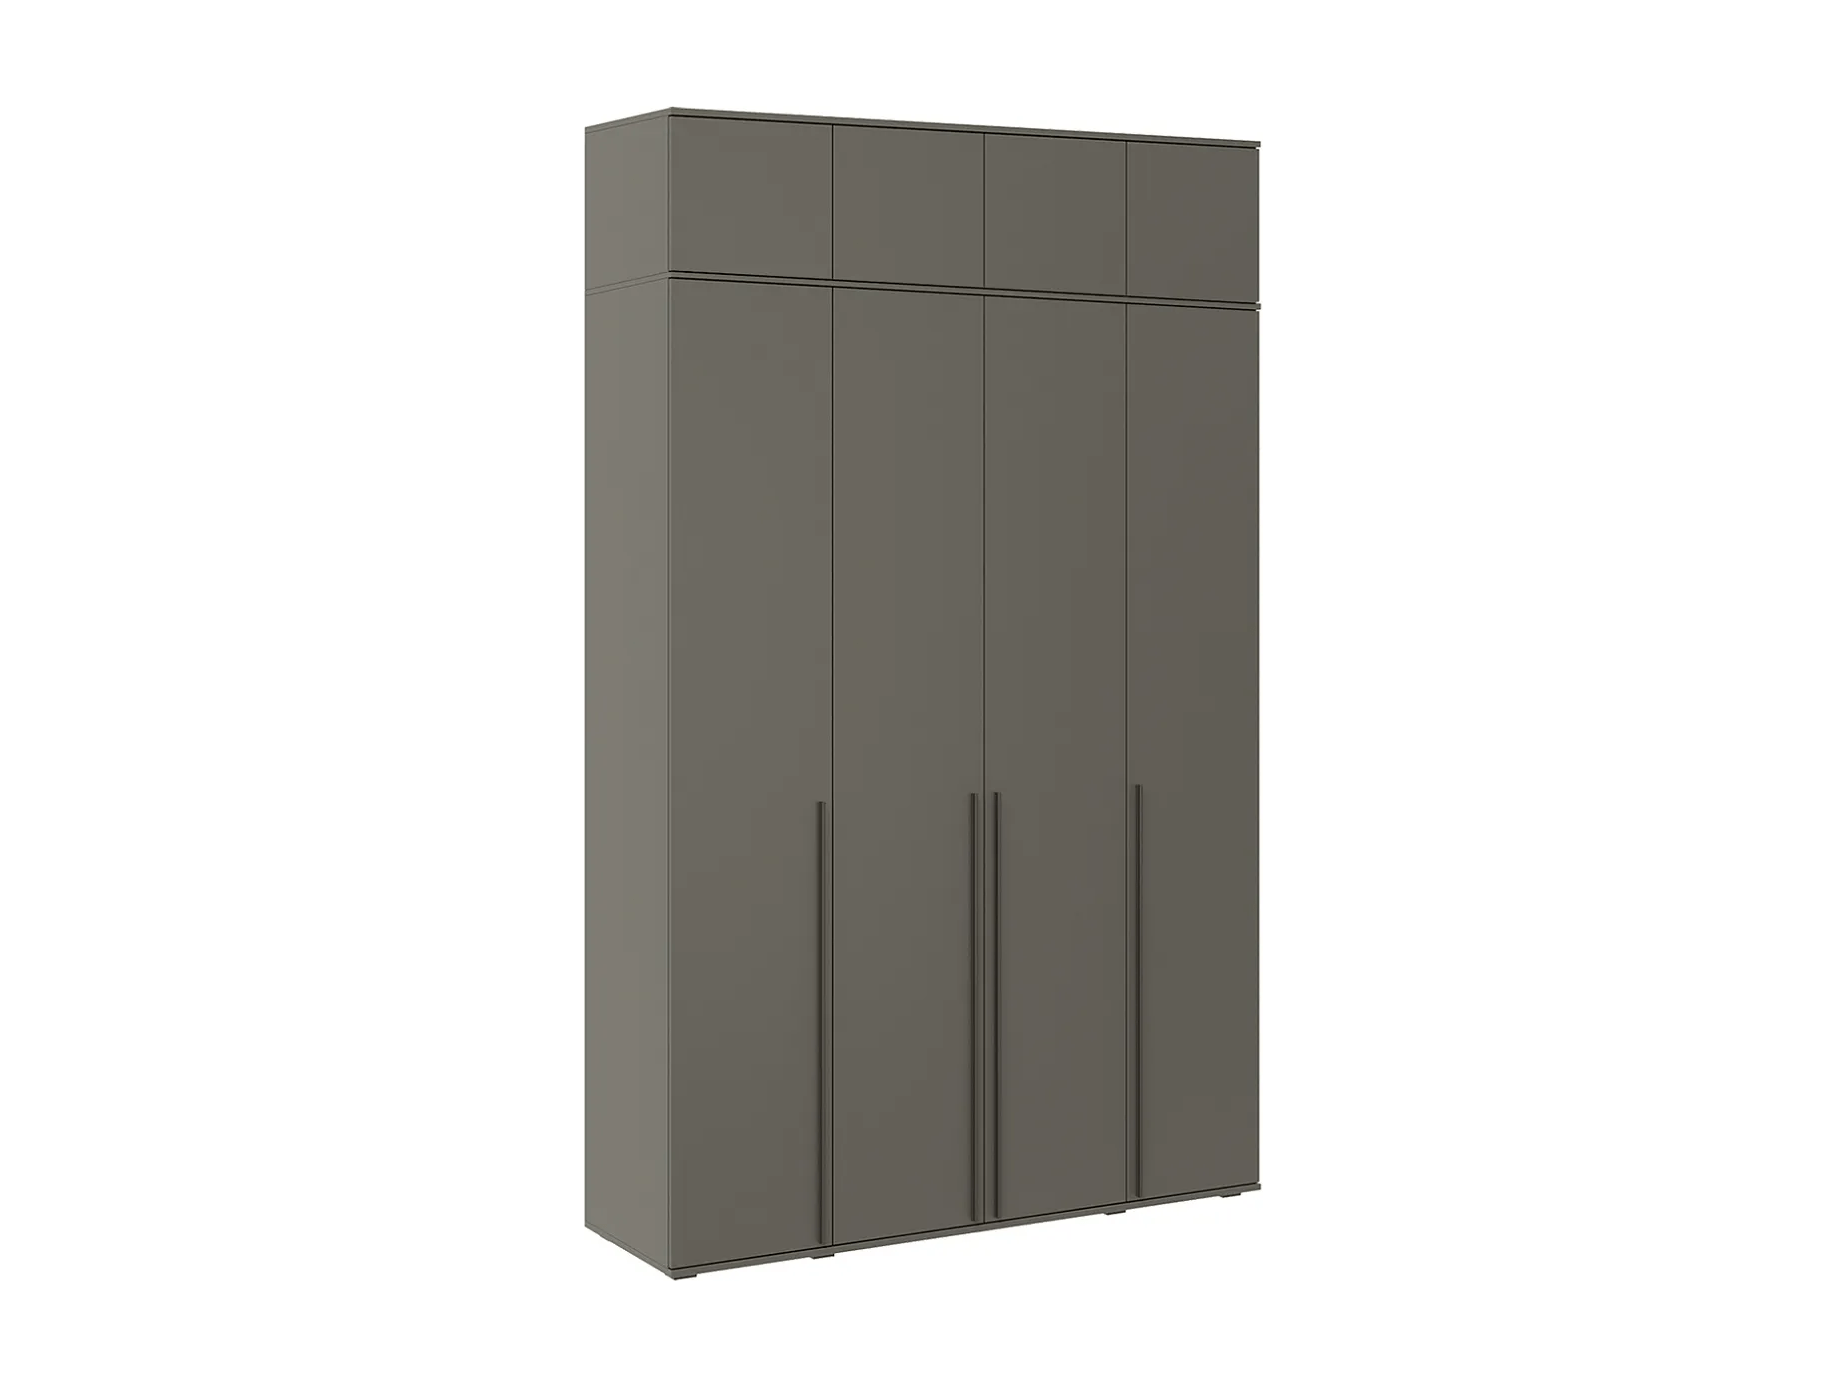 Норд Шкаф 4-х створчатый 1600 + Норд Антресоль к шкафу (1600) (графит) Черный, ЛДСП шкаф 2 х створчатый с выдвижной штангой норд